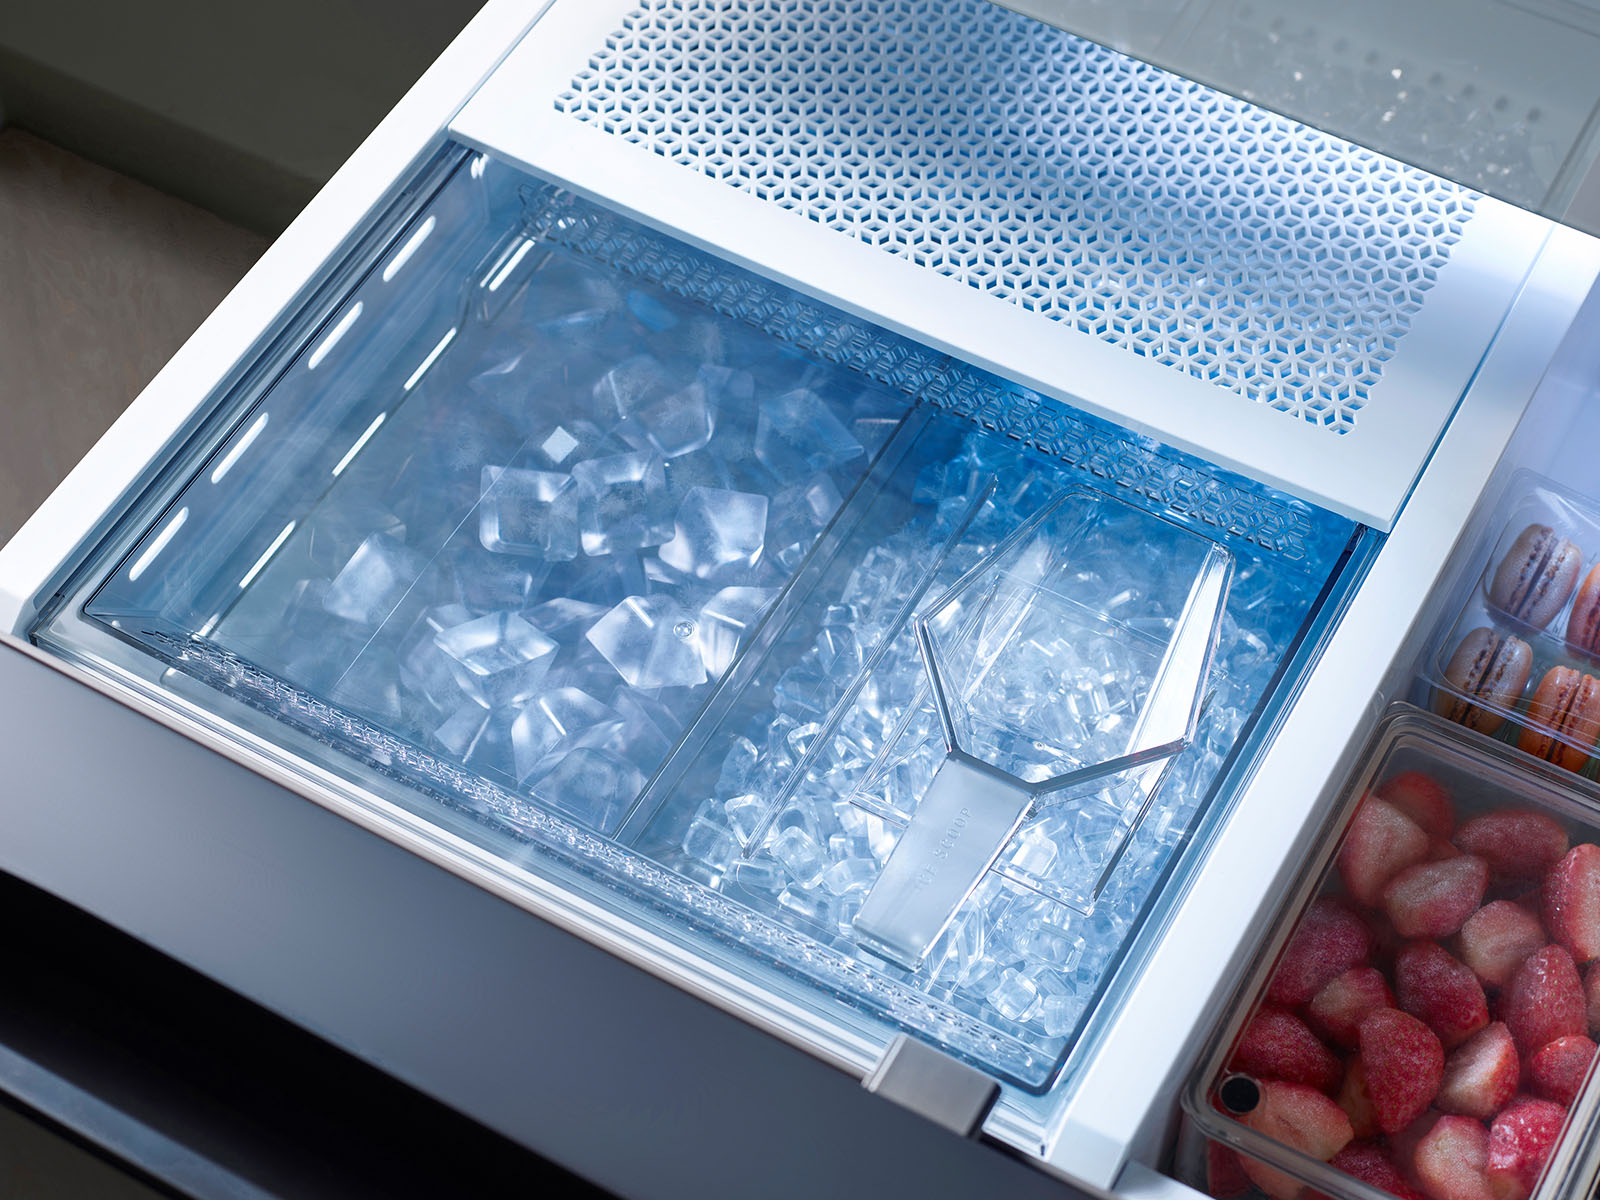 Liebherr Refrigerator Reviews: Unbiased Expert Insight